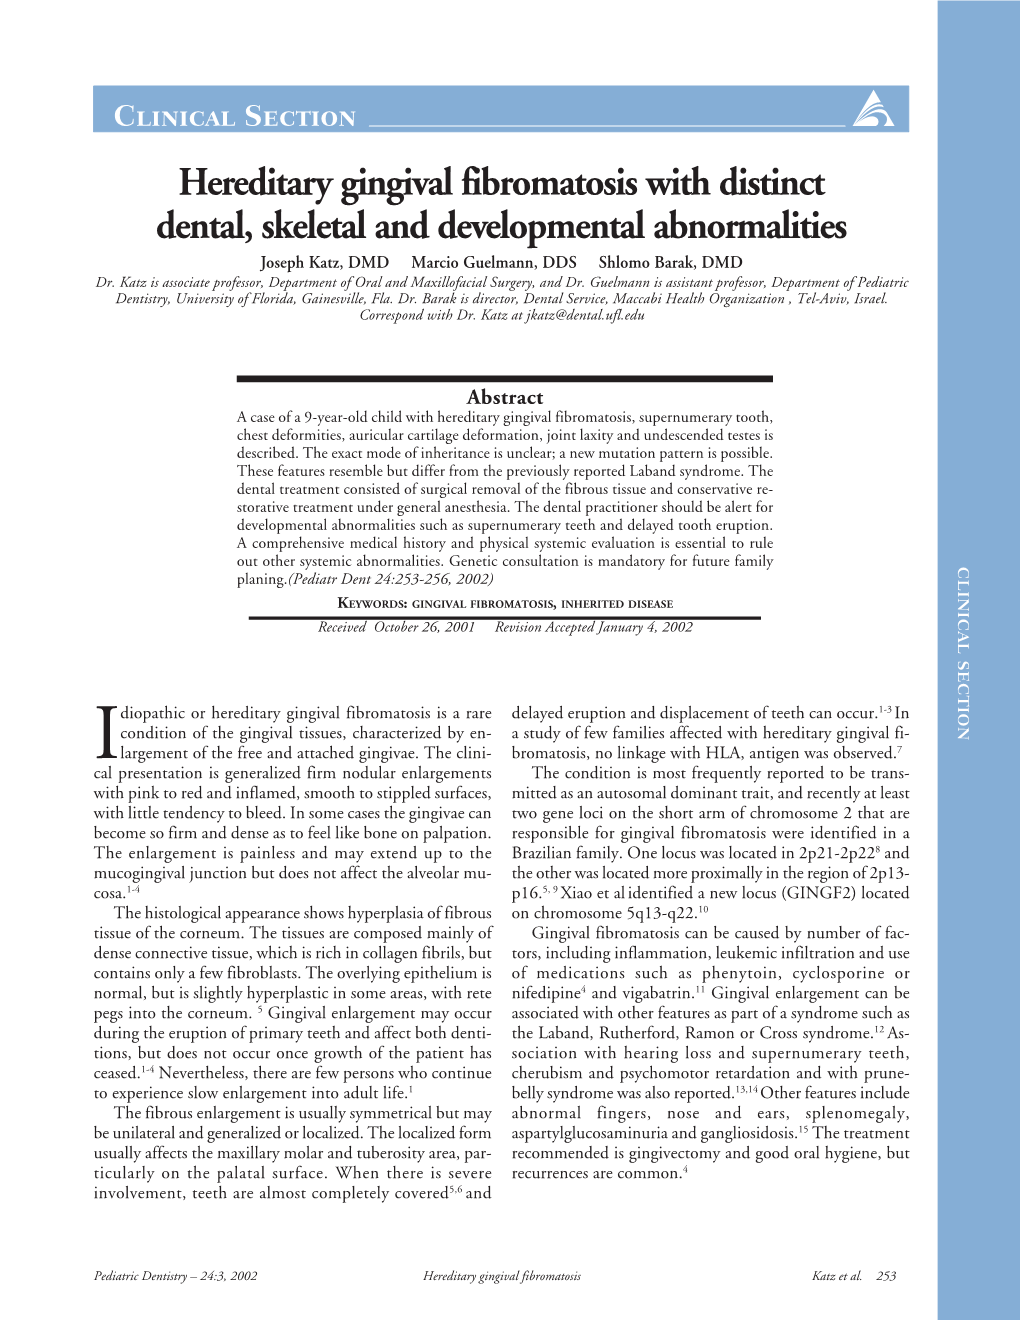 Hereditary Gingival Fibromatosis with Distinct Dental, Skeletal and Developmental Abnormalities Joseph Katz, DMD Marcio Guelmann, DDS Shlomo Barak, DMD Dr